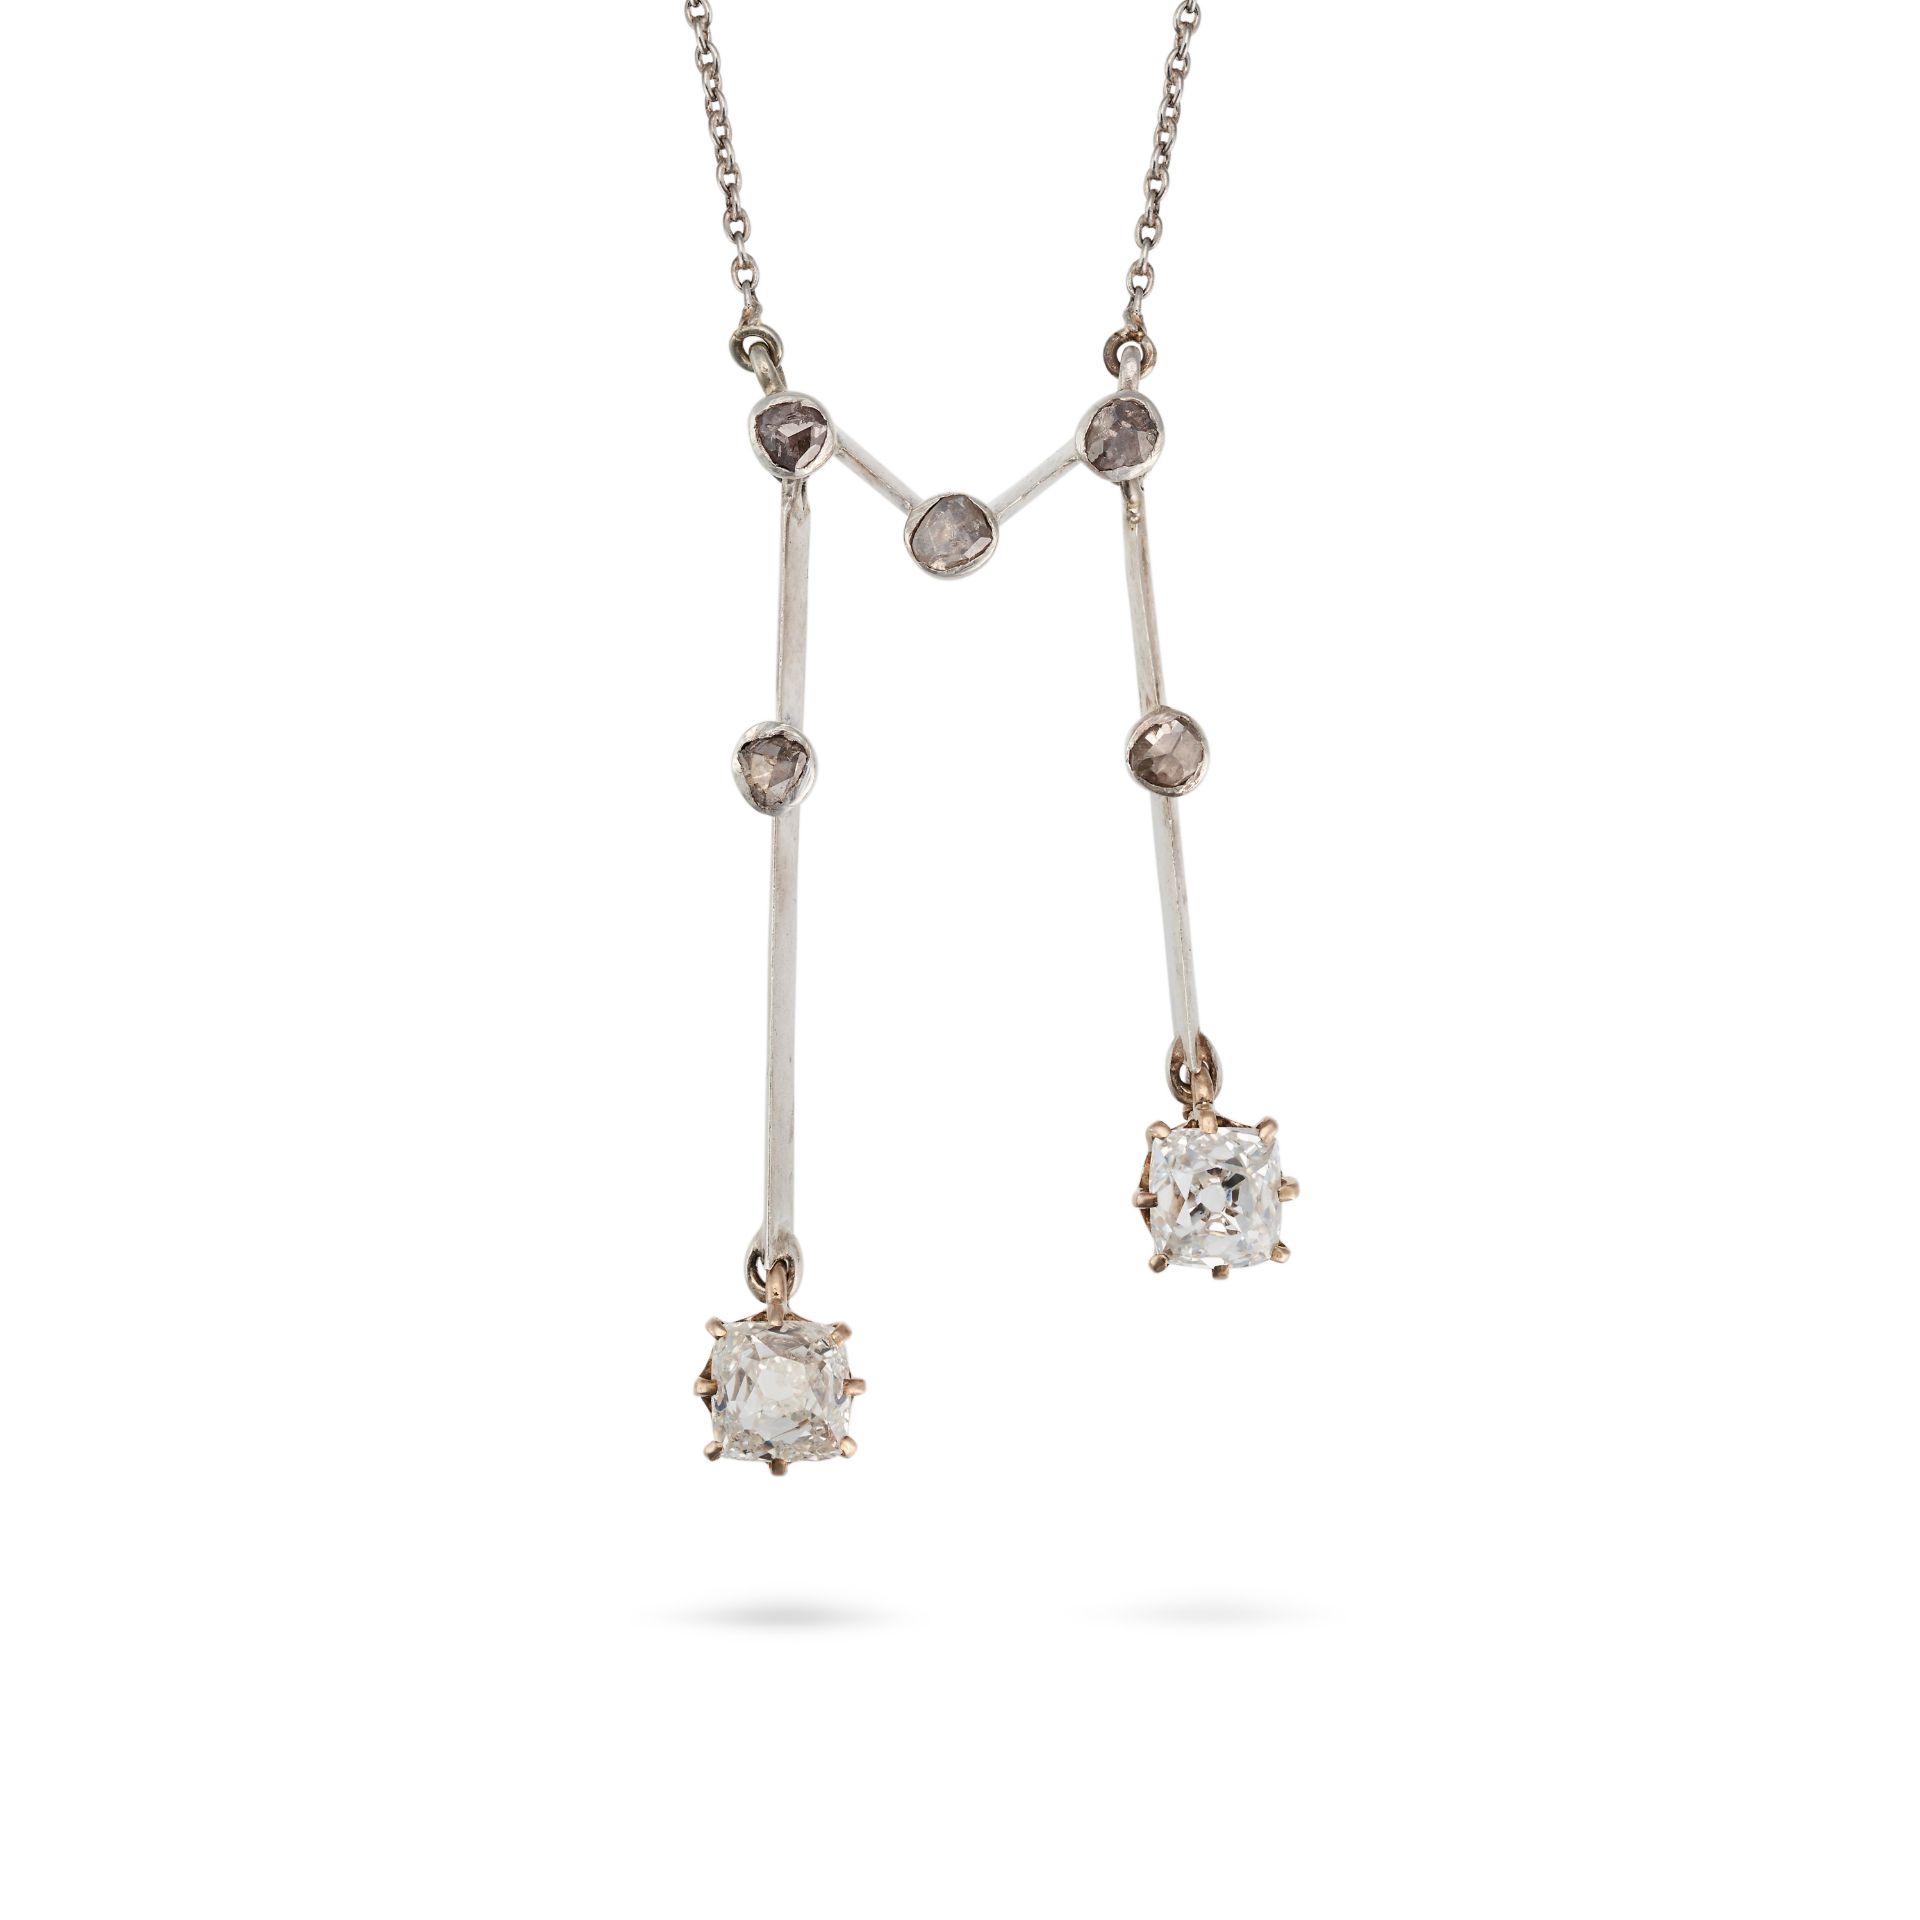 AN ANTIQUE DIAMOND NEGLIGEE PENDANT NECKLACE the pendant set with rose cut diamonds suspending tw...